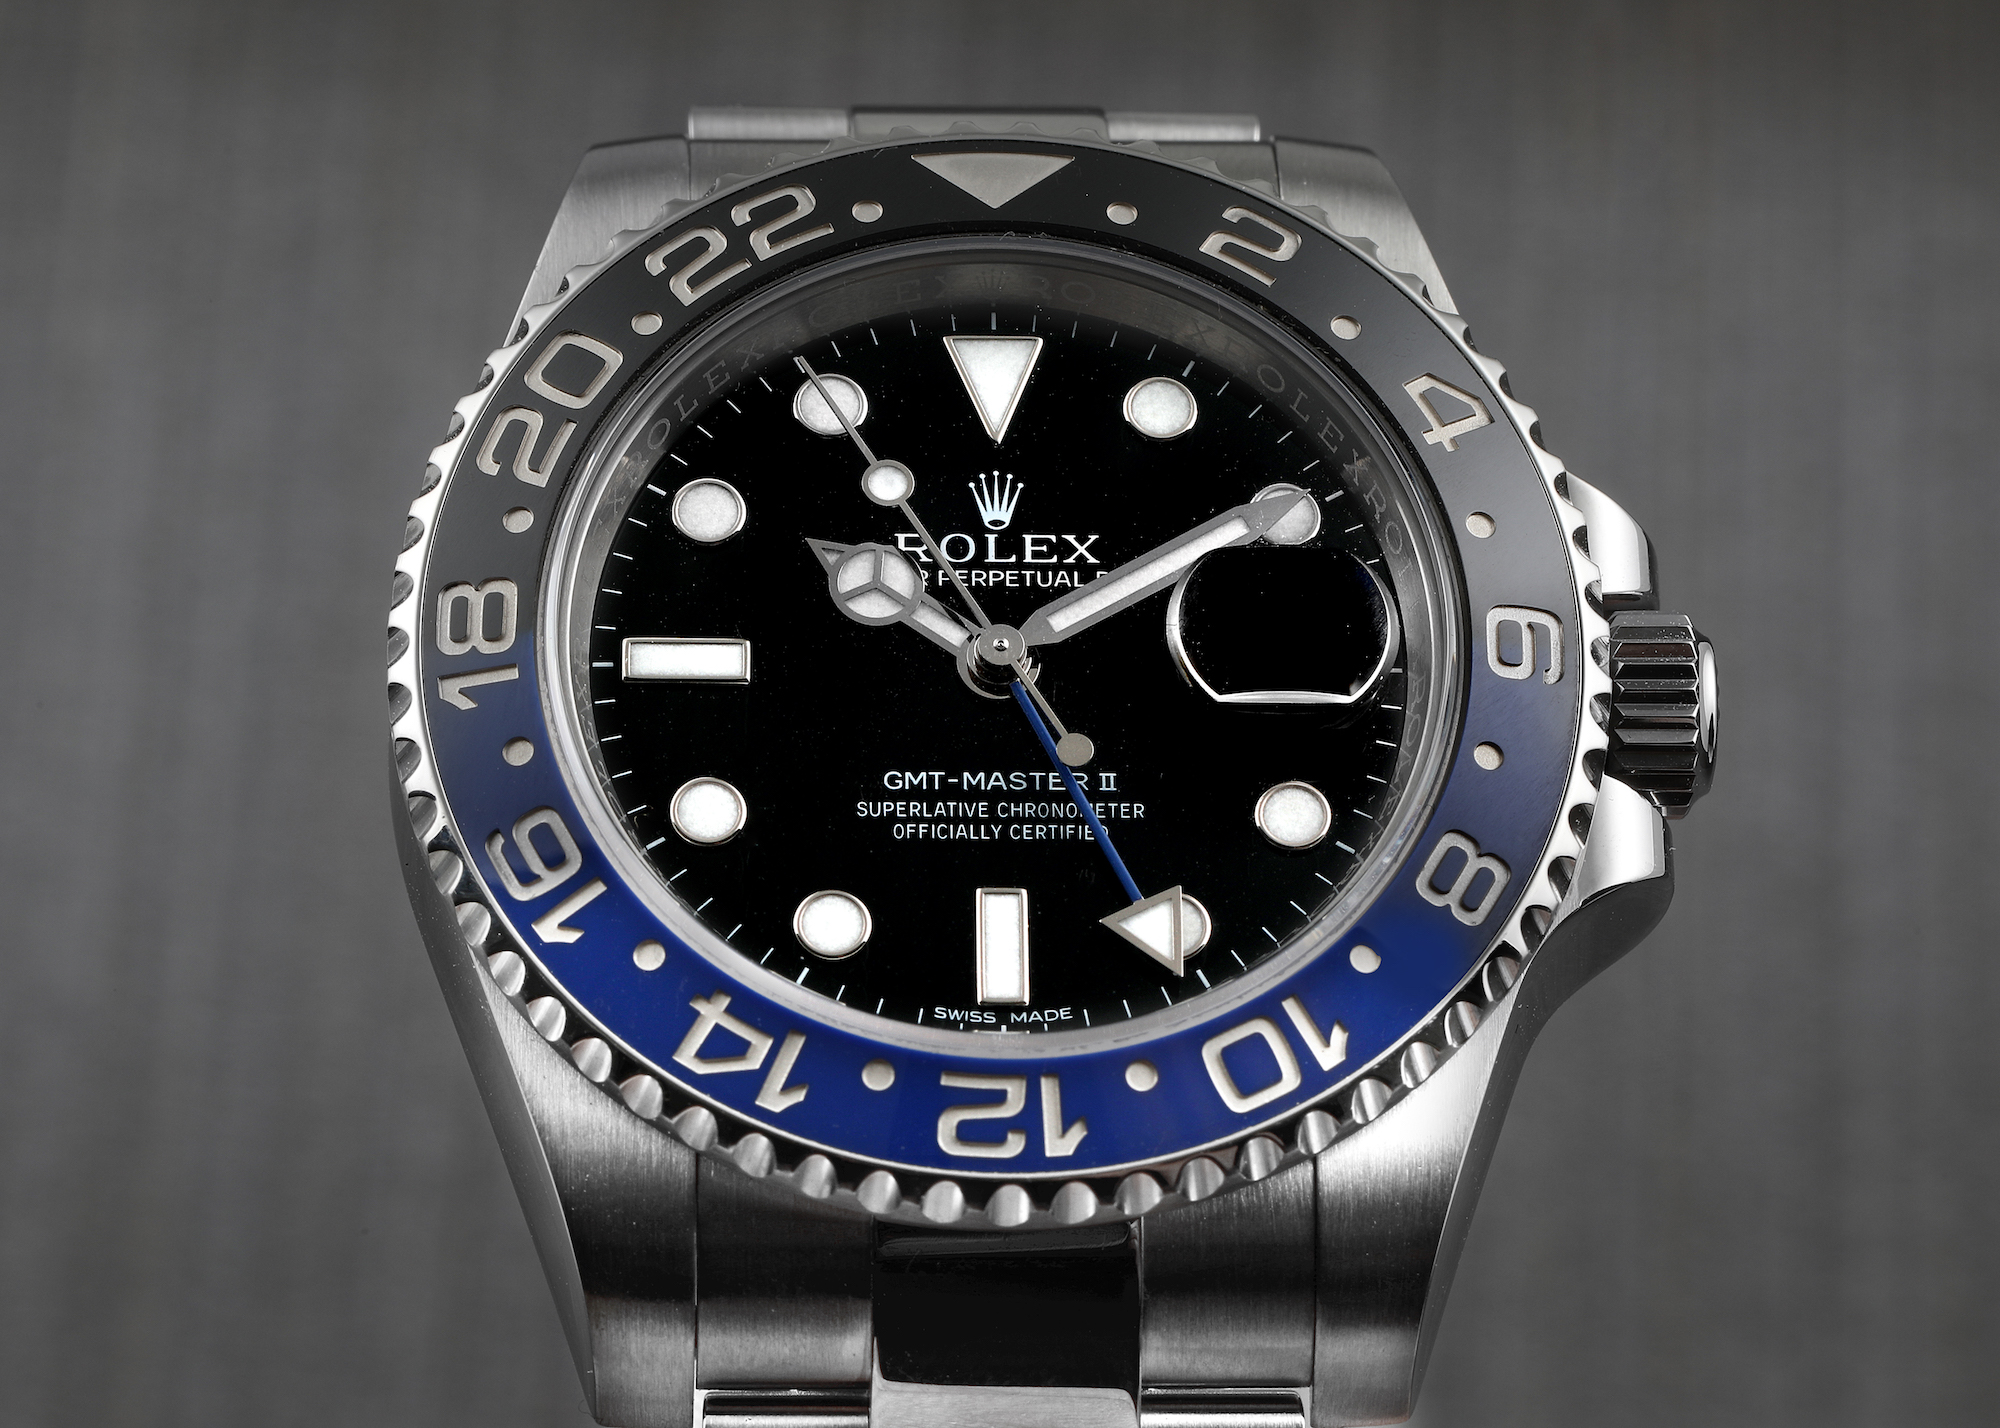 Rolex GMT Master II Black Blue Batman Ceramic Bezel Steel Mens Watch 126710